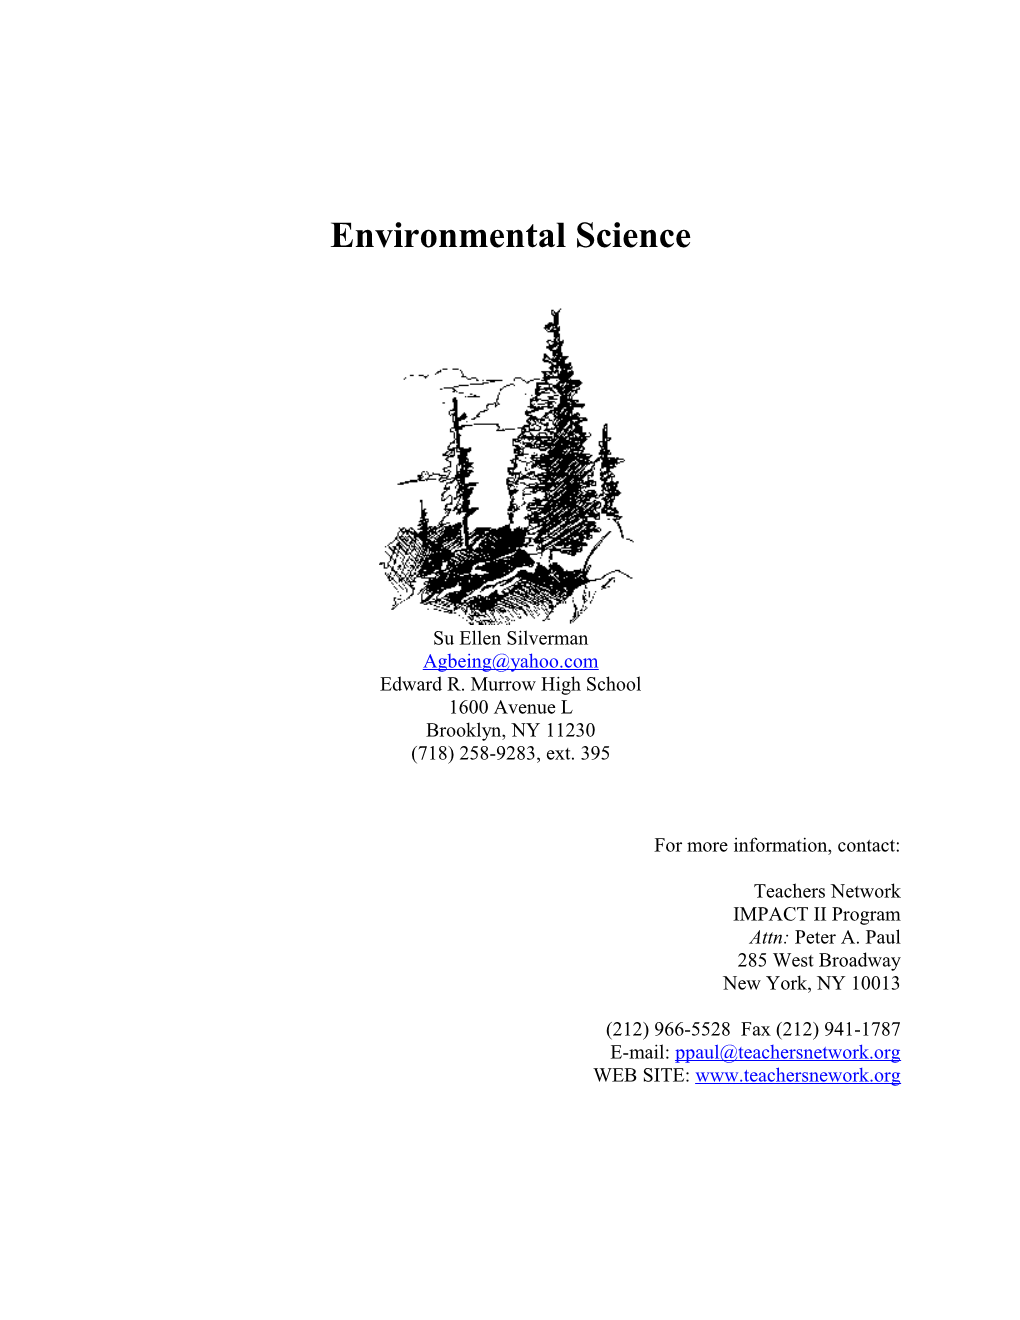 Environmental Science s2